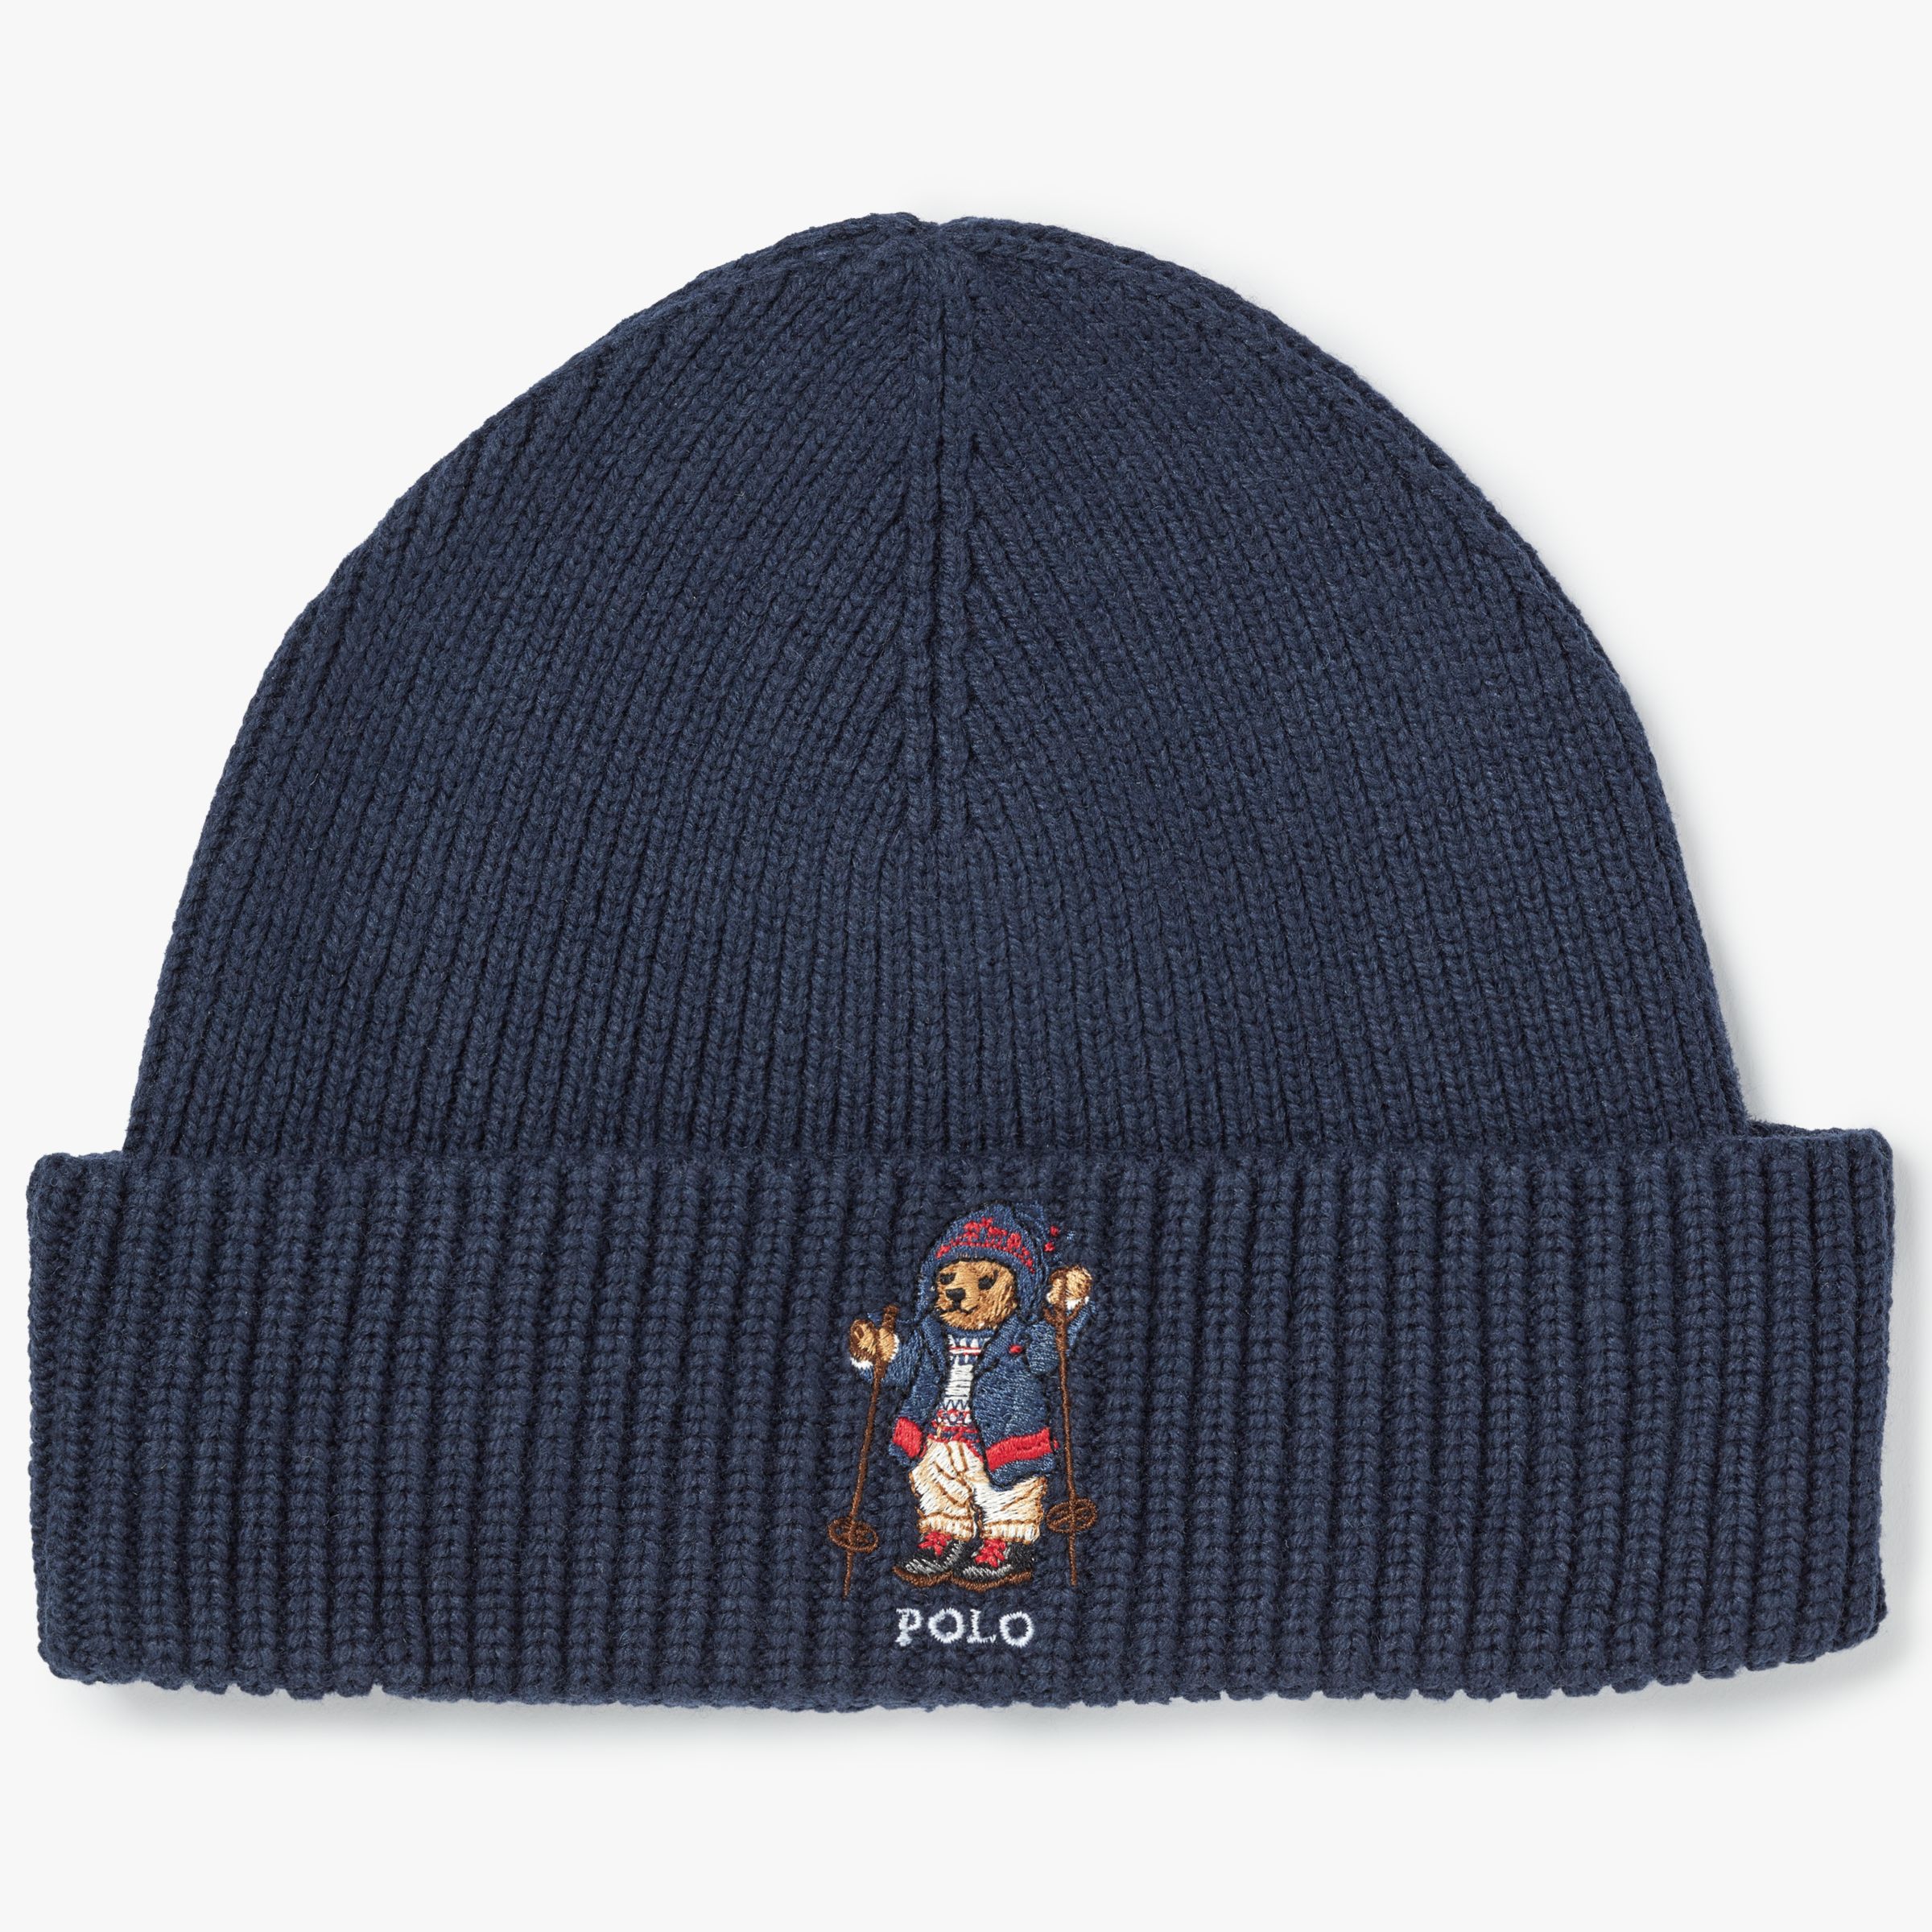 ralph lauren ski bear hat